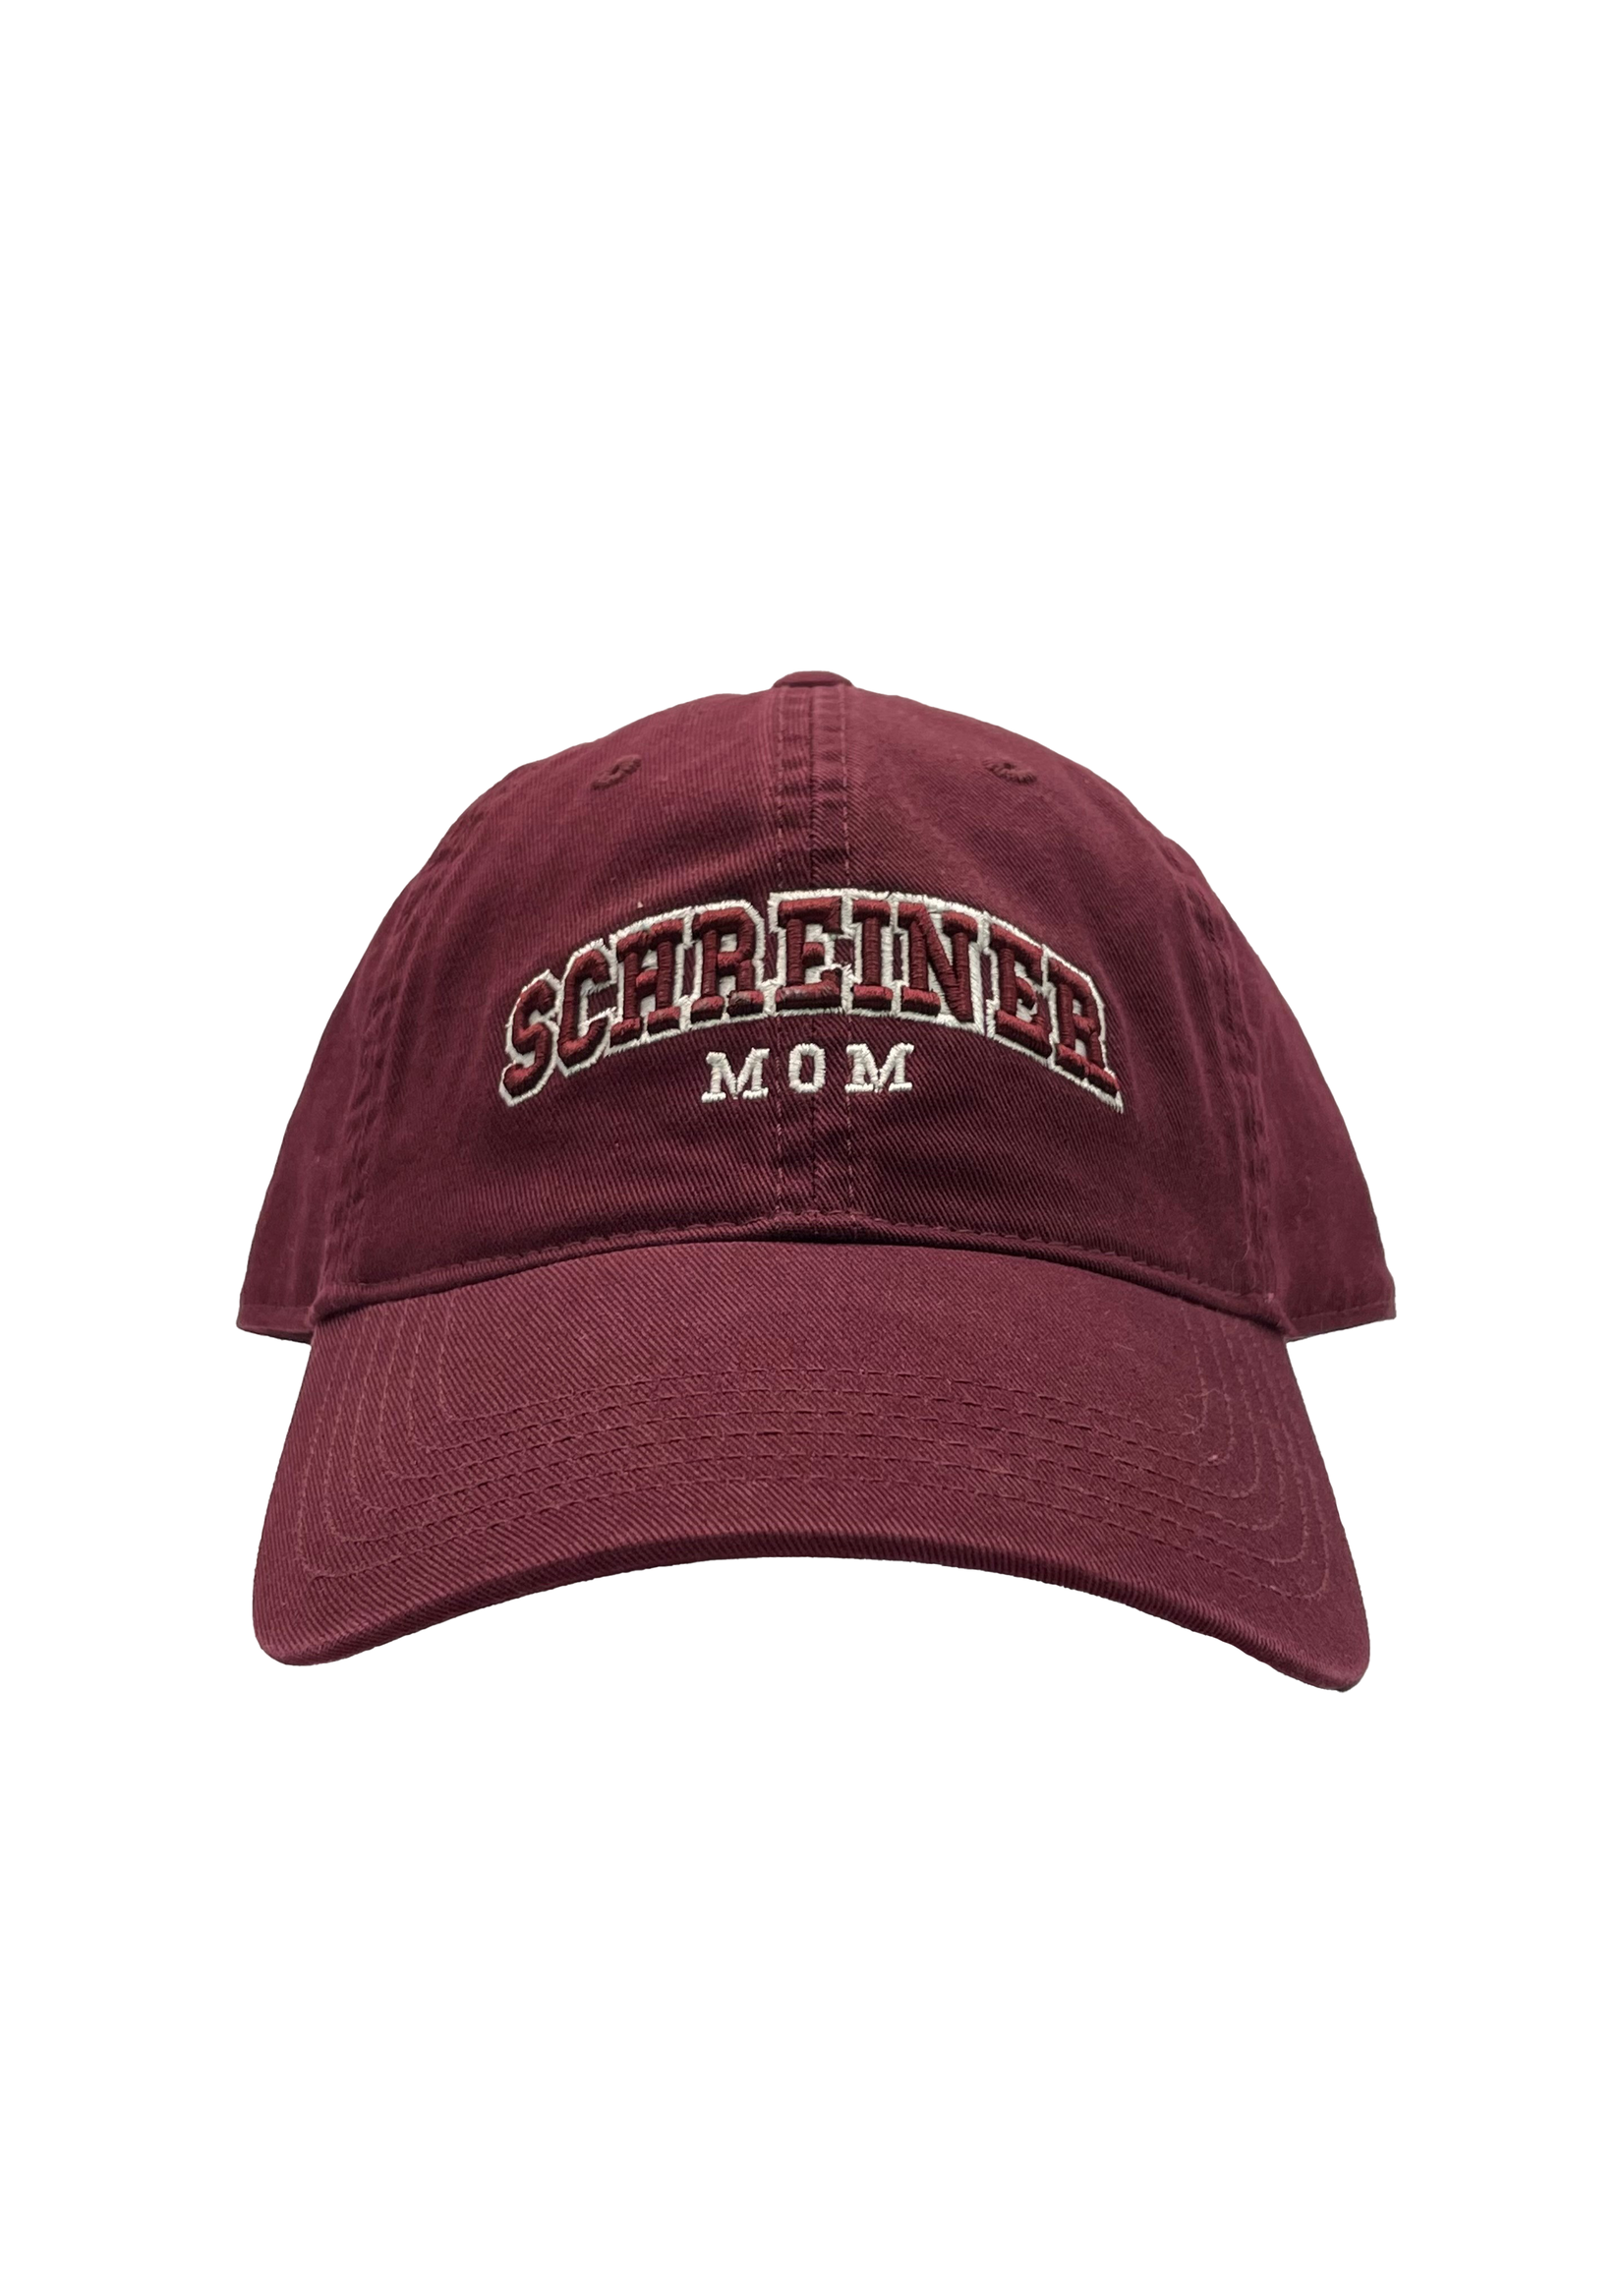 League Mom Maroon Hat